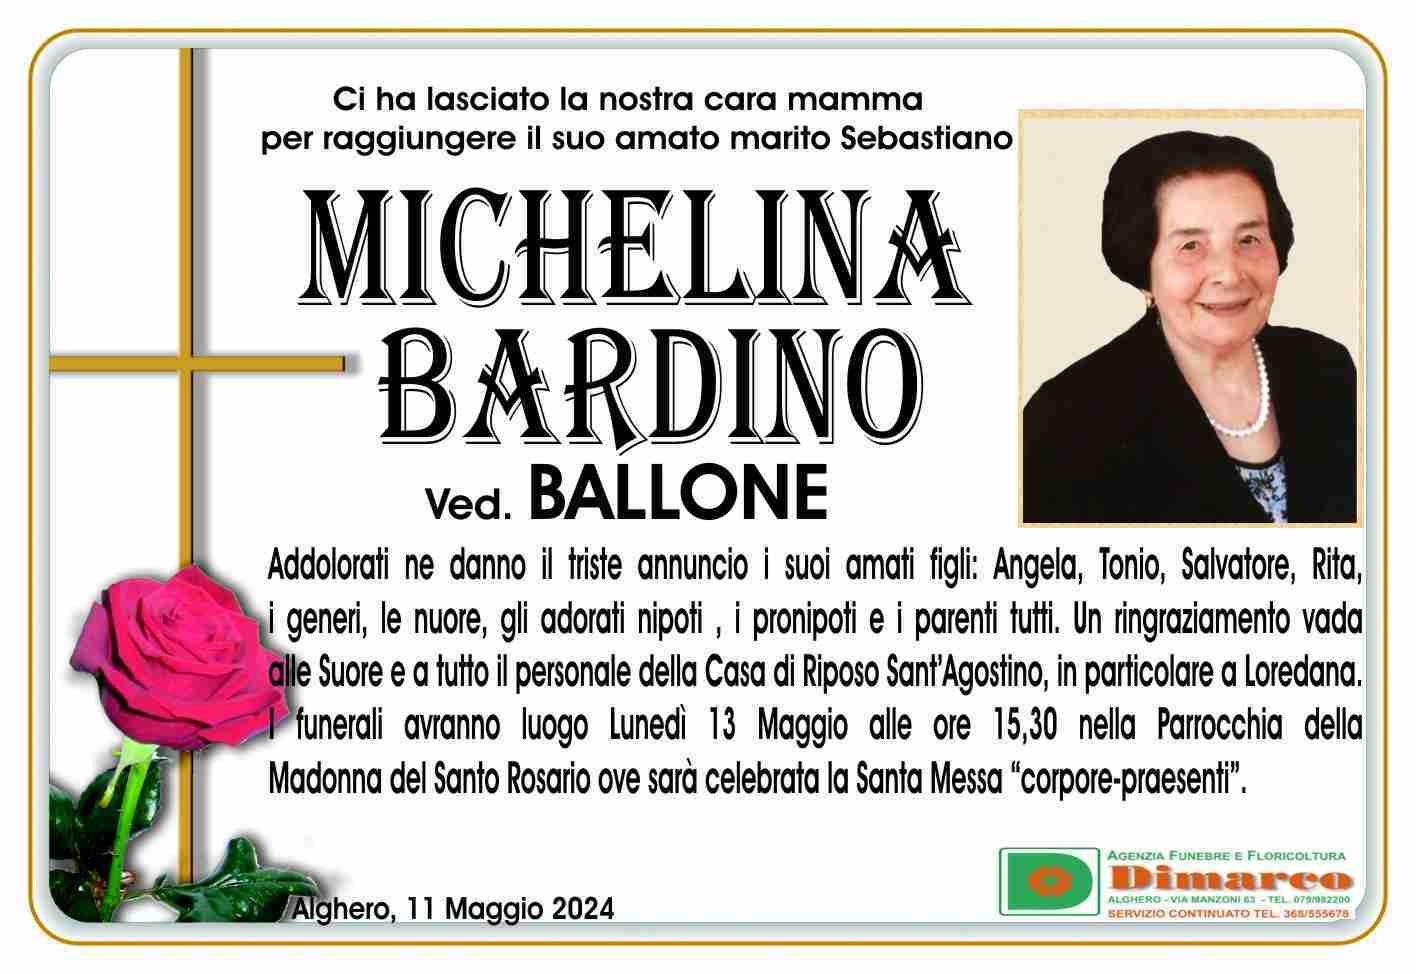 Michelina Bardino ved. Ballone